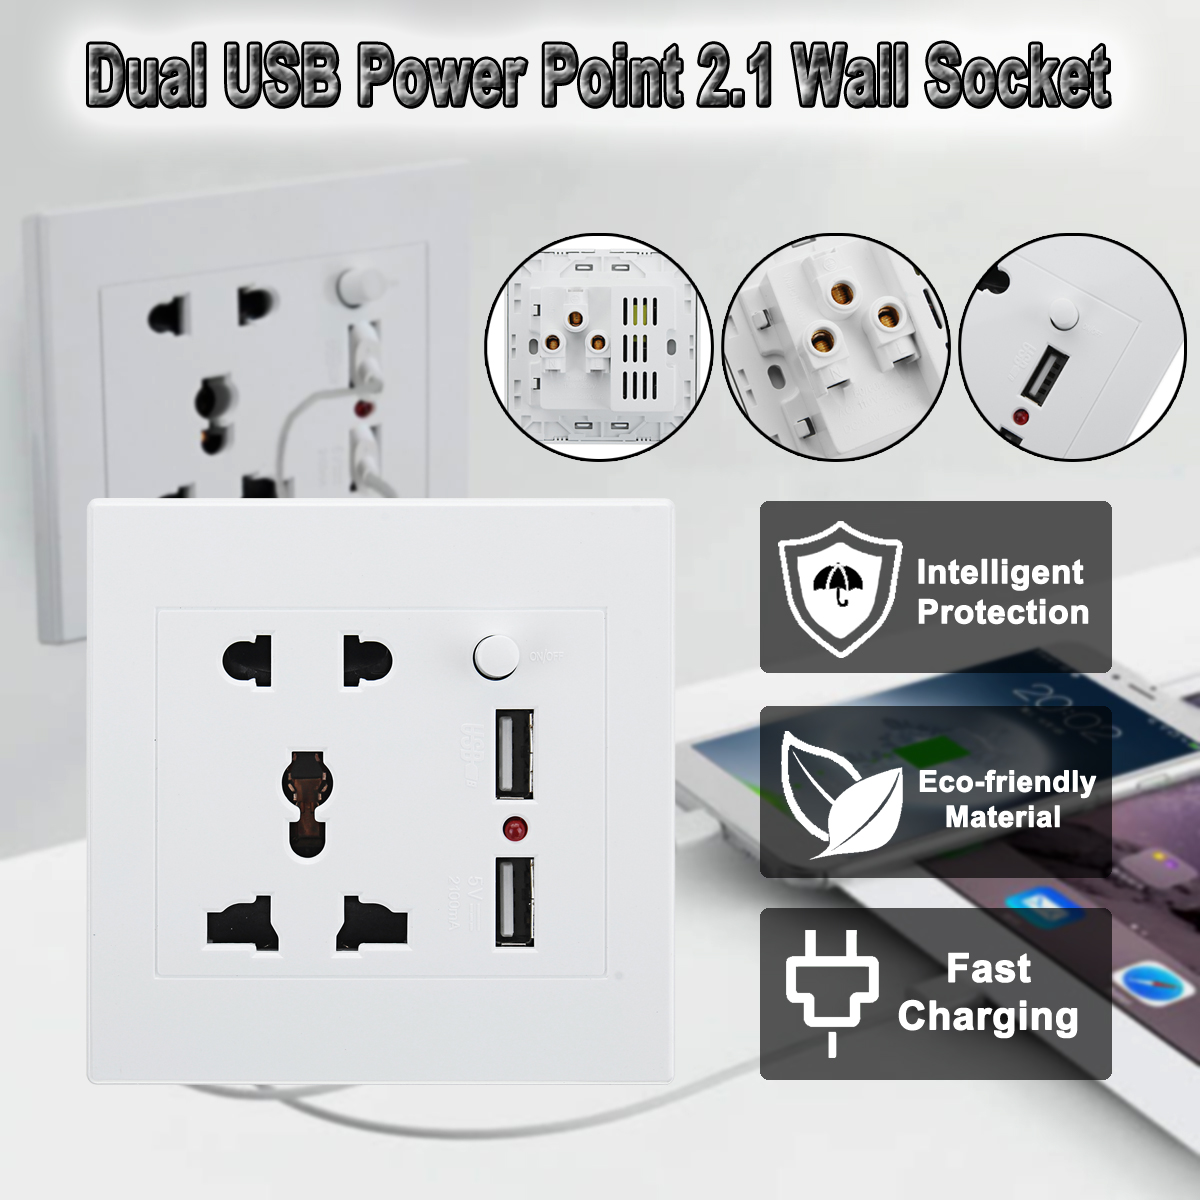 Dual USB Wall Socket